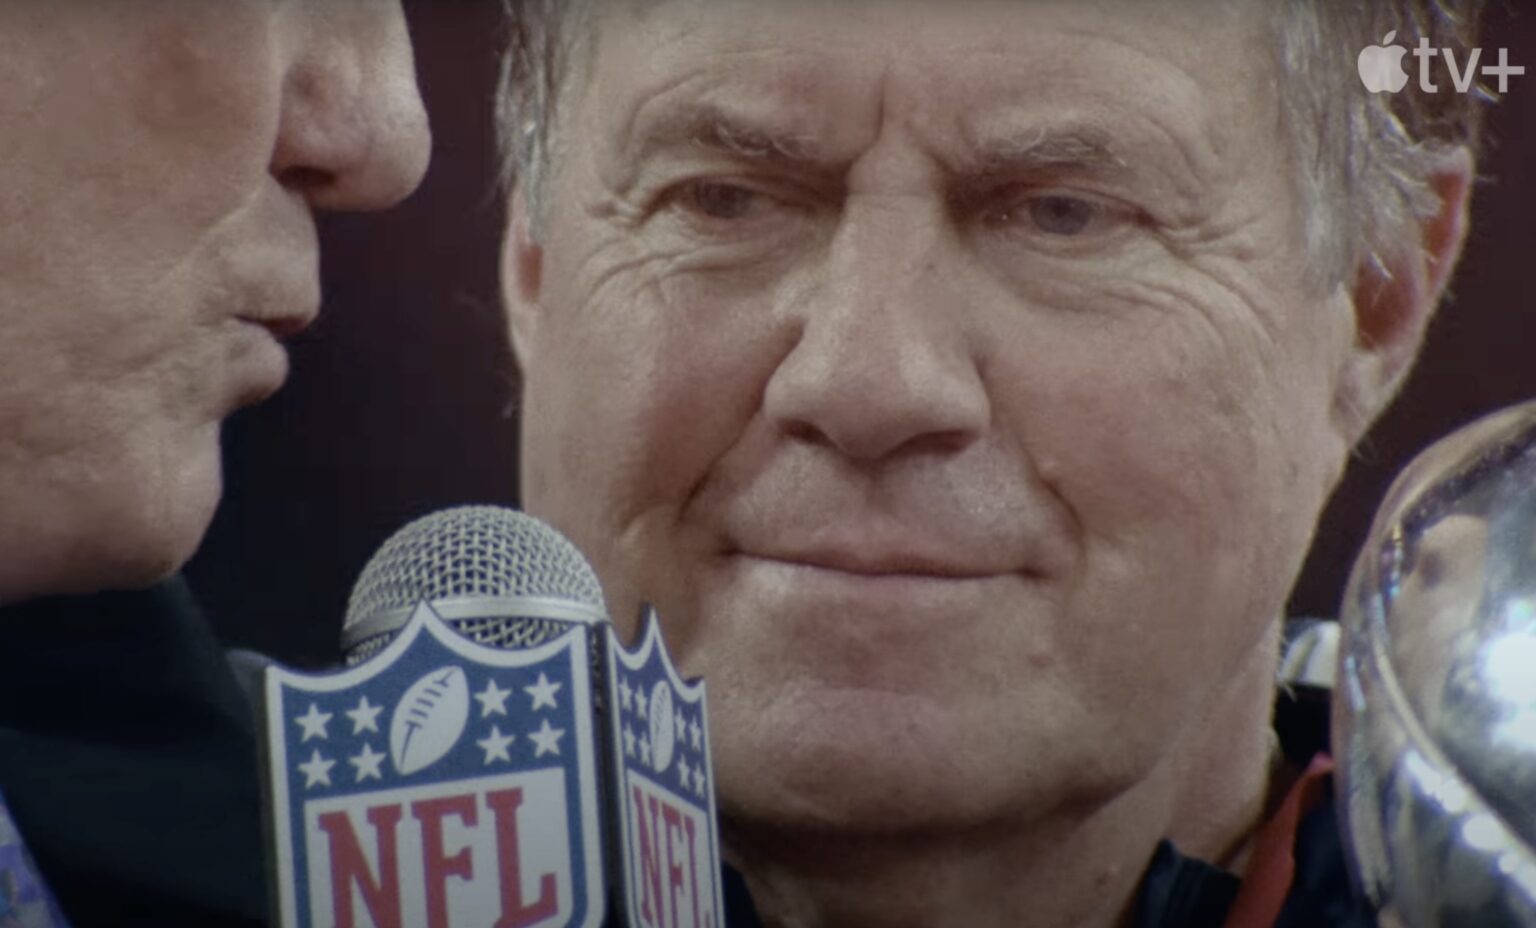 New England Patriots coach Bill Belichick